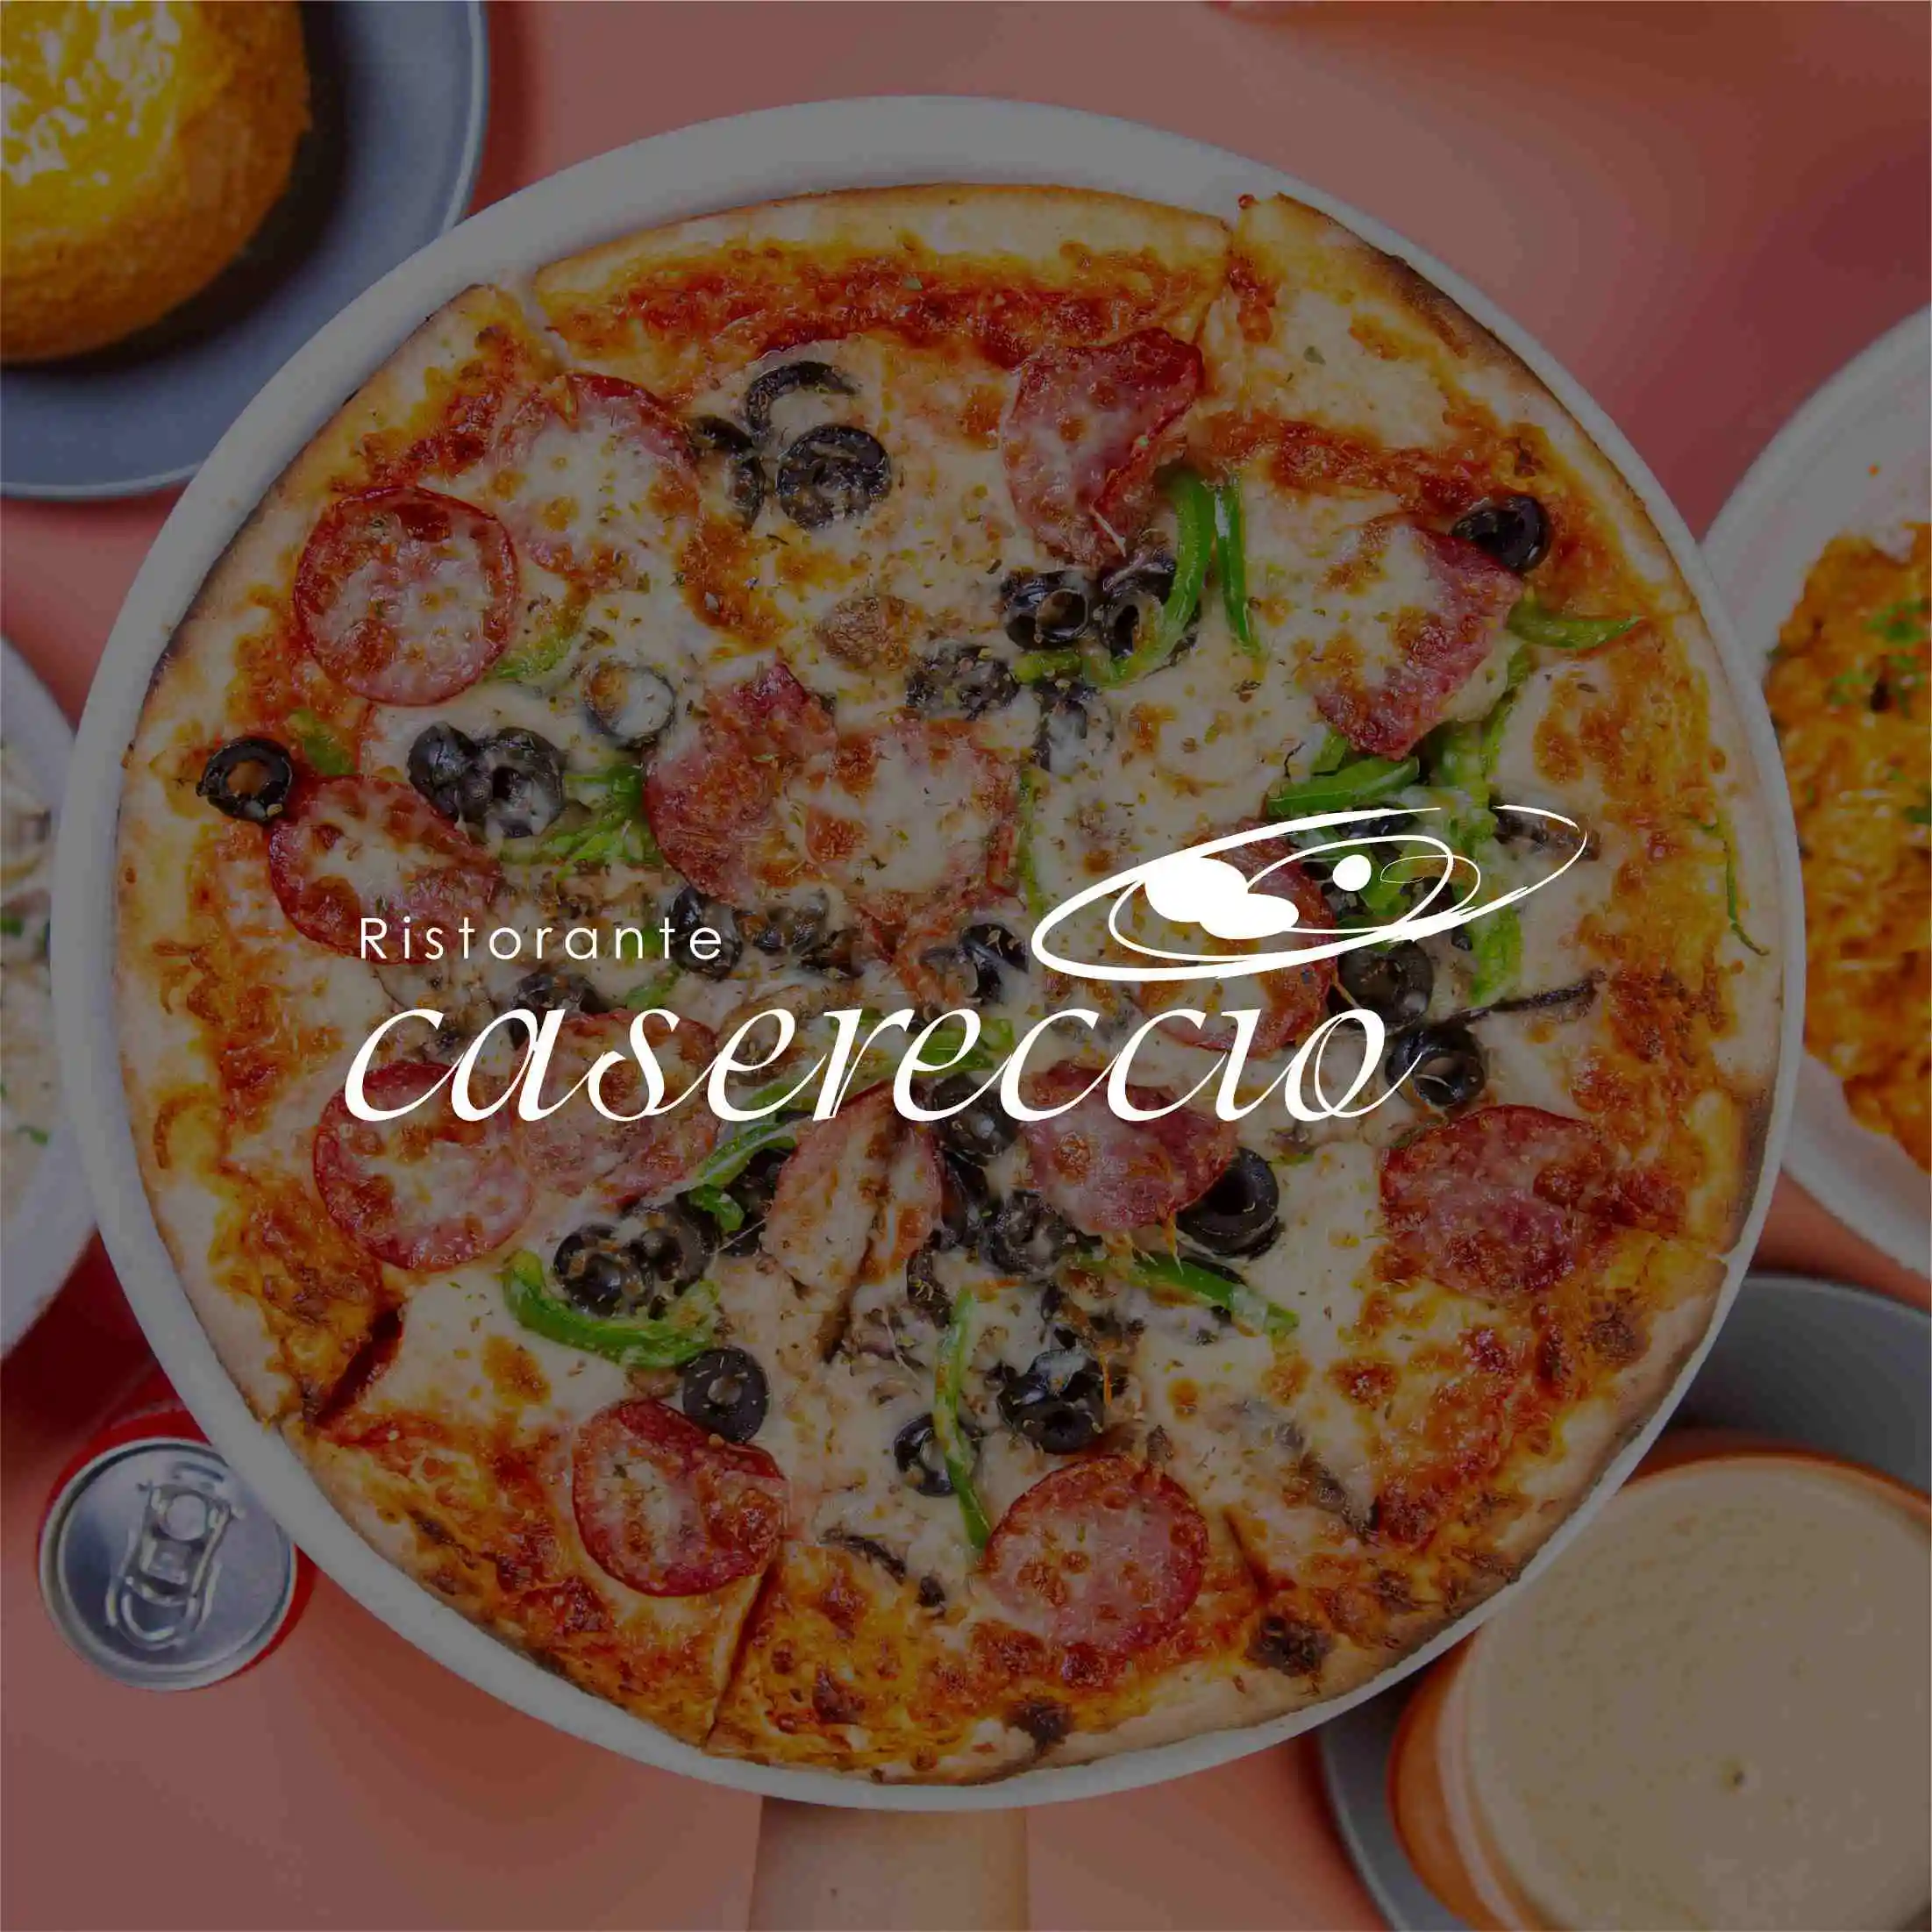 EAT Global - Casereccio Restaurant logo